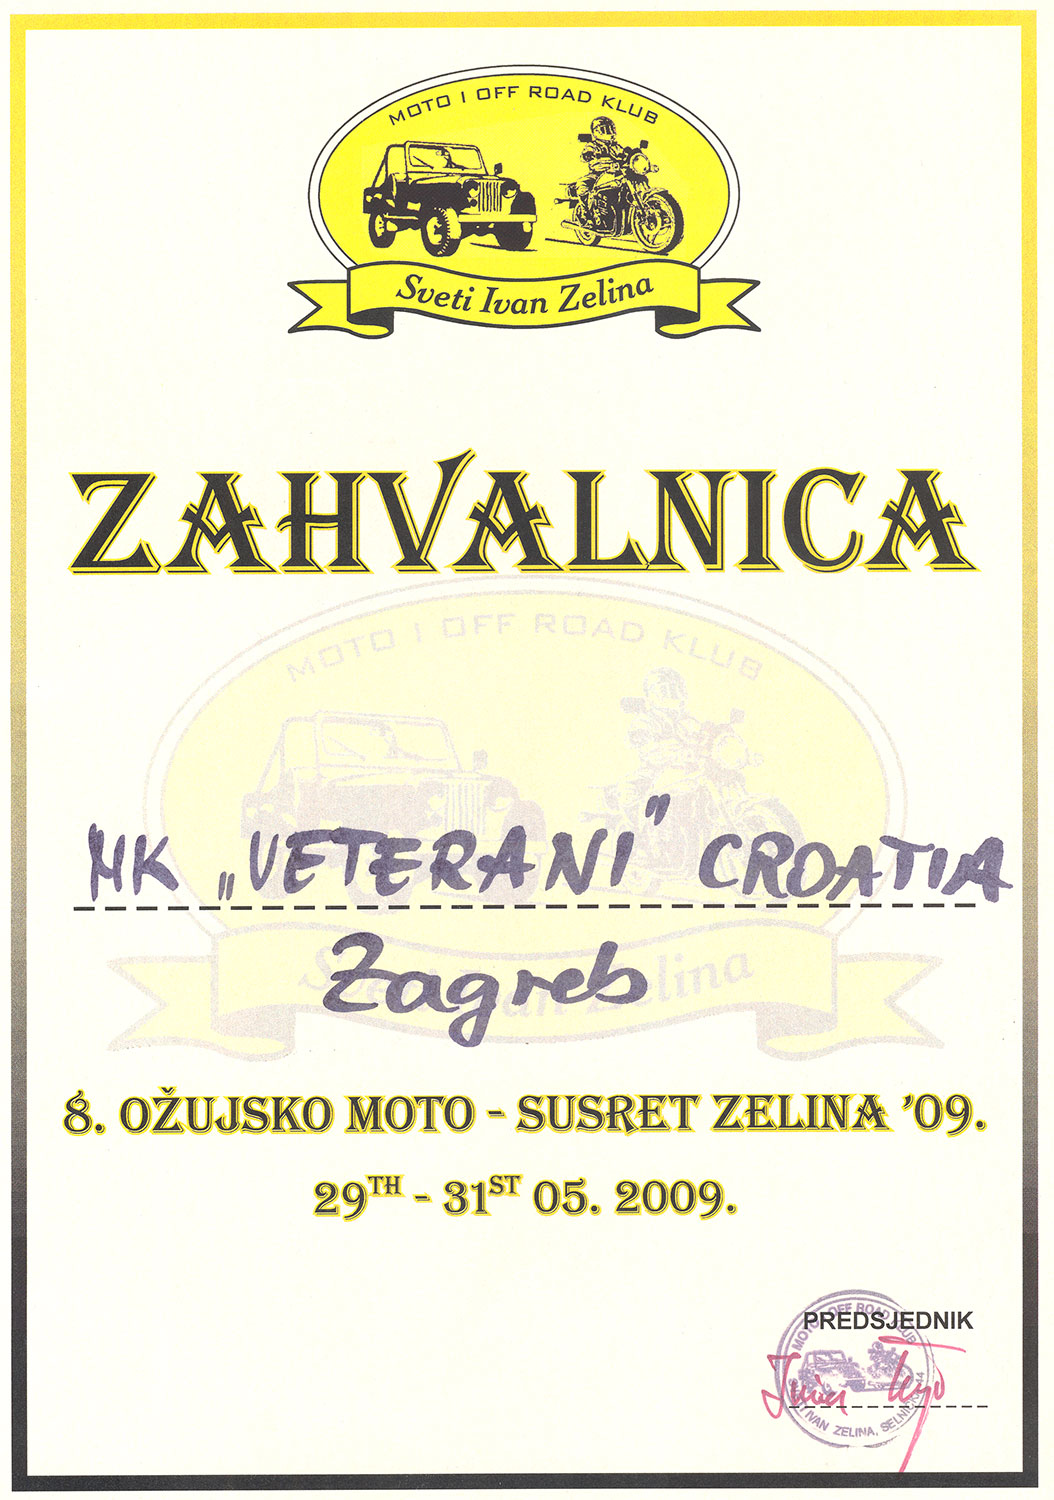 2009 05 29 moto i off road klub sveti ivan zelina